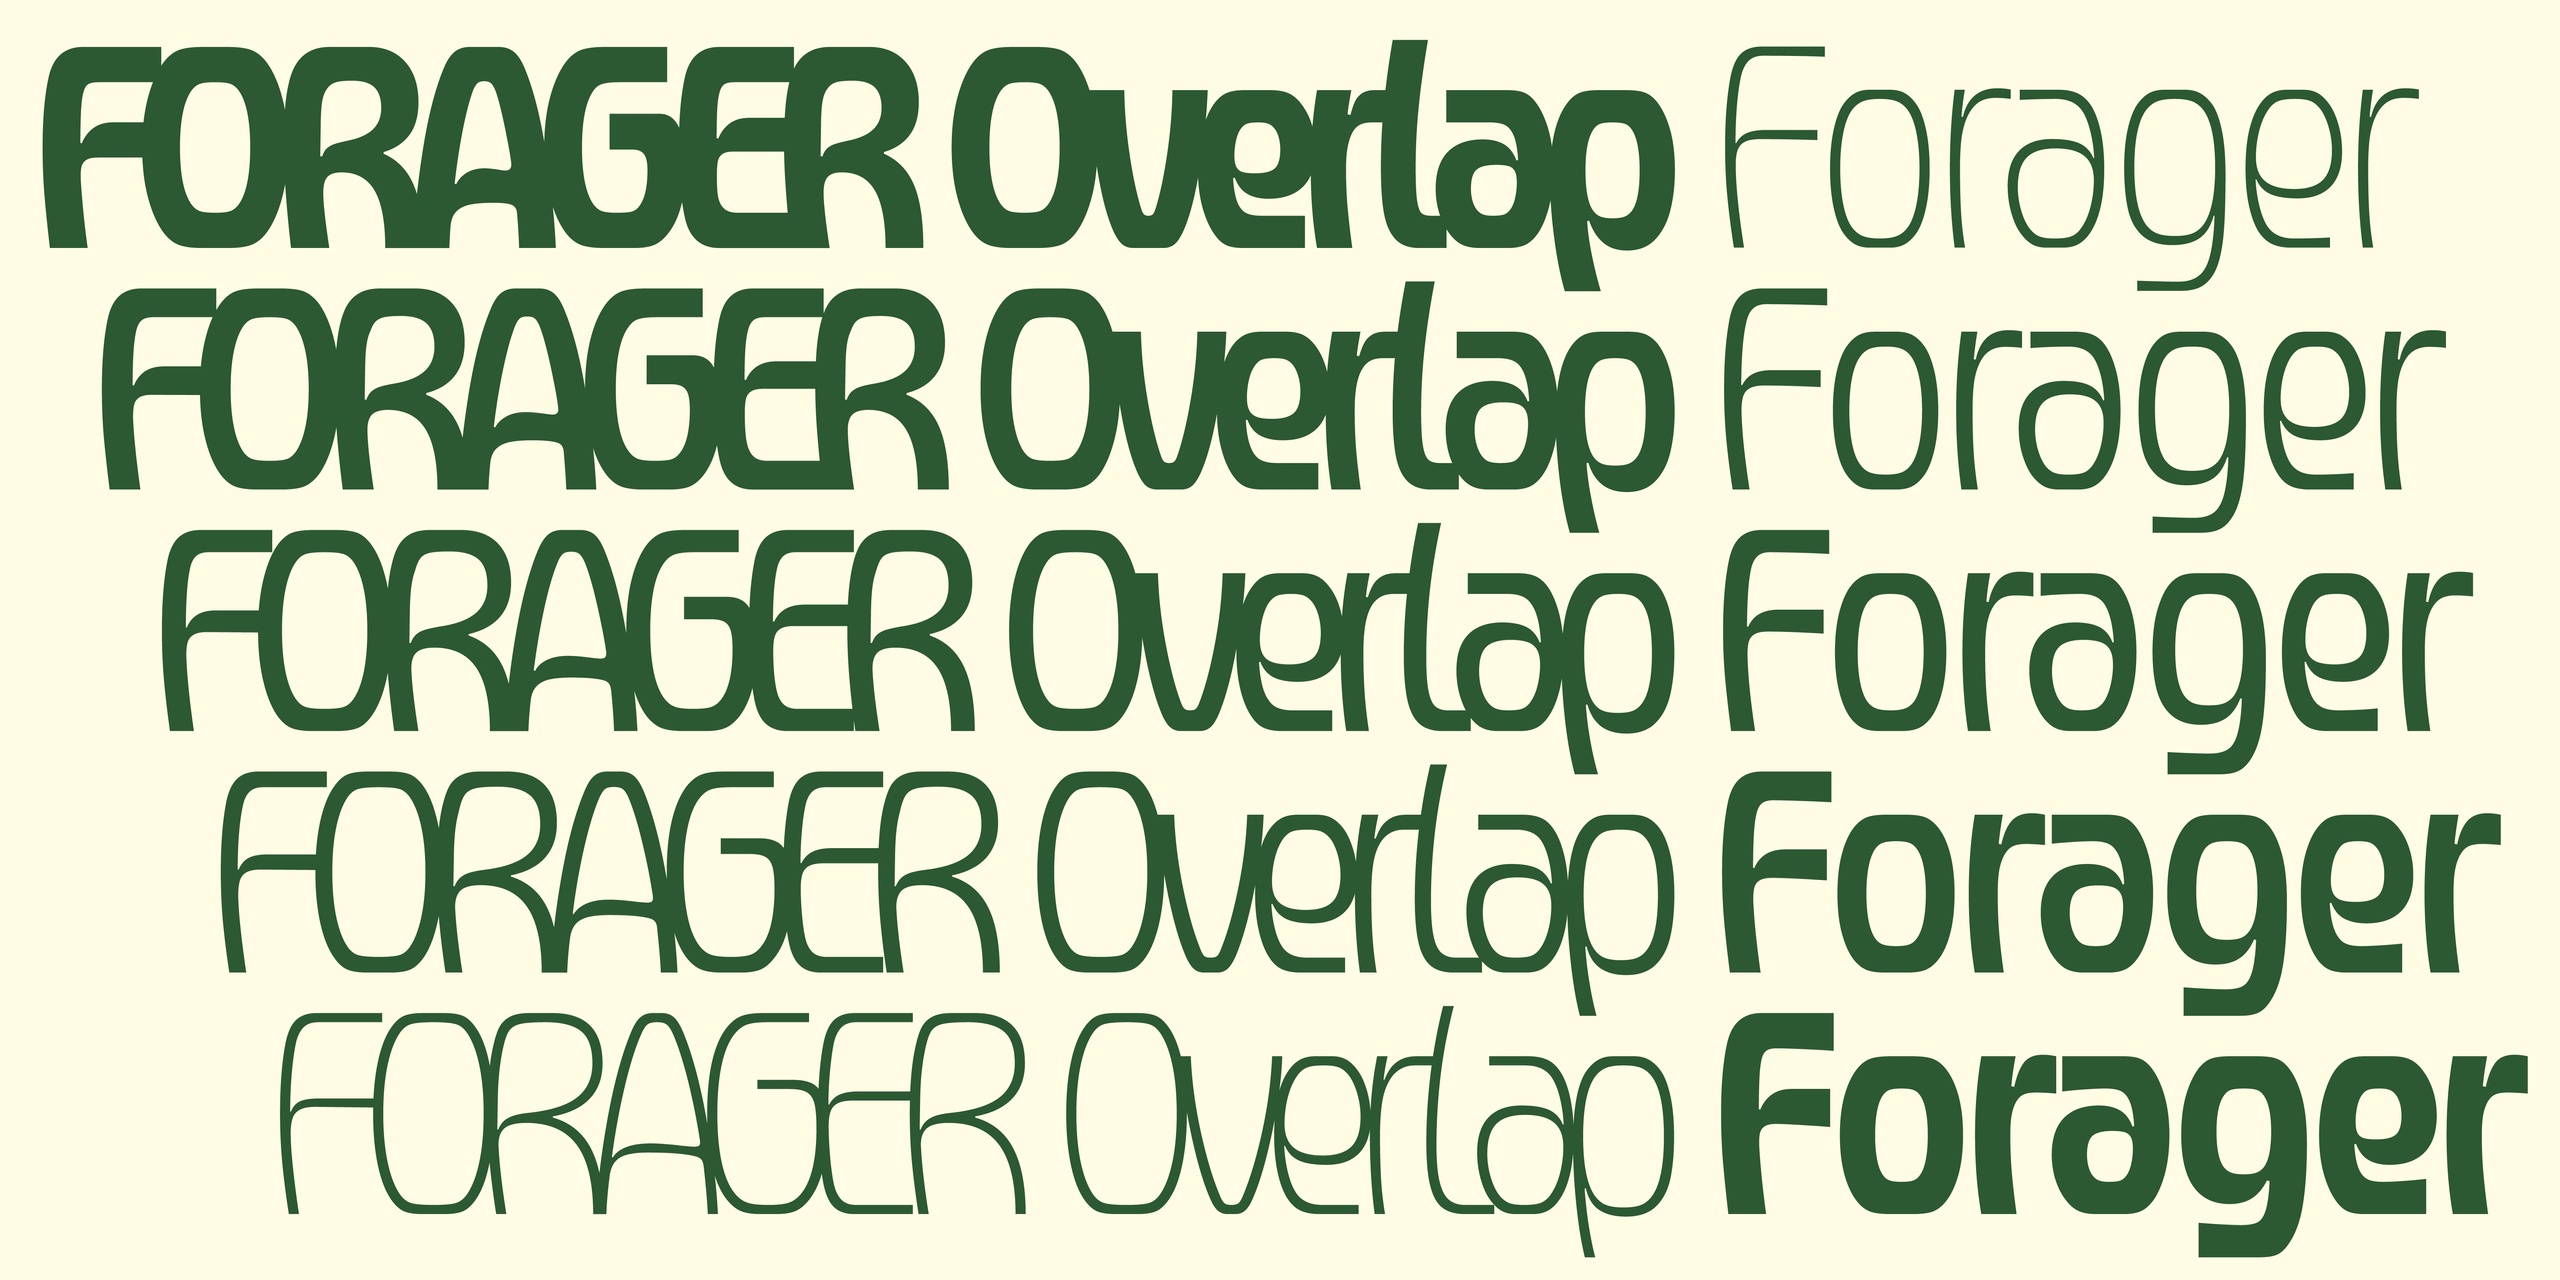 Пример шрифта Forager Medium Overlap